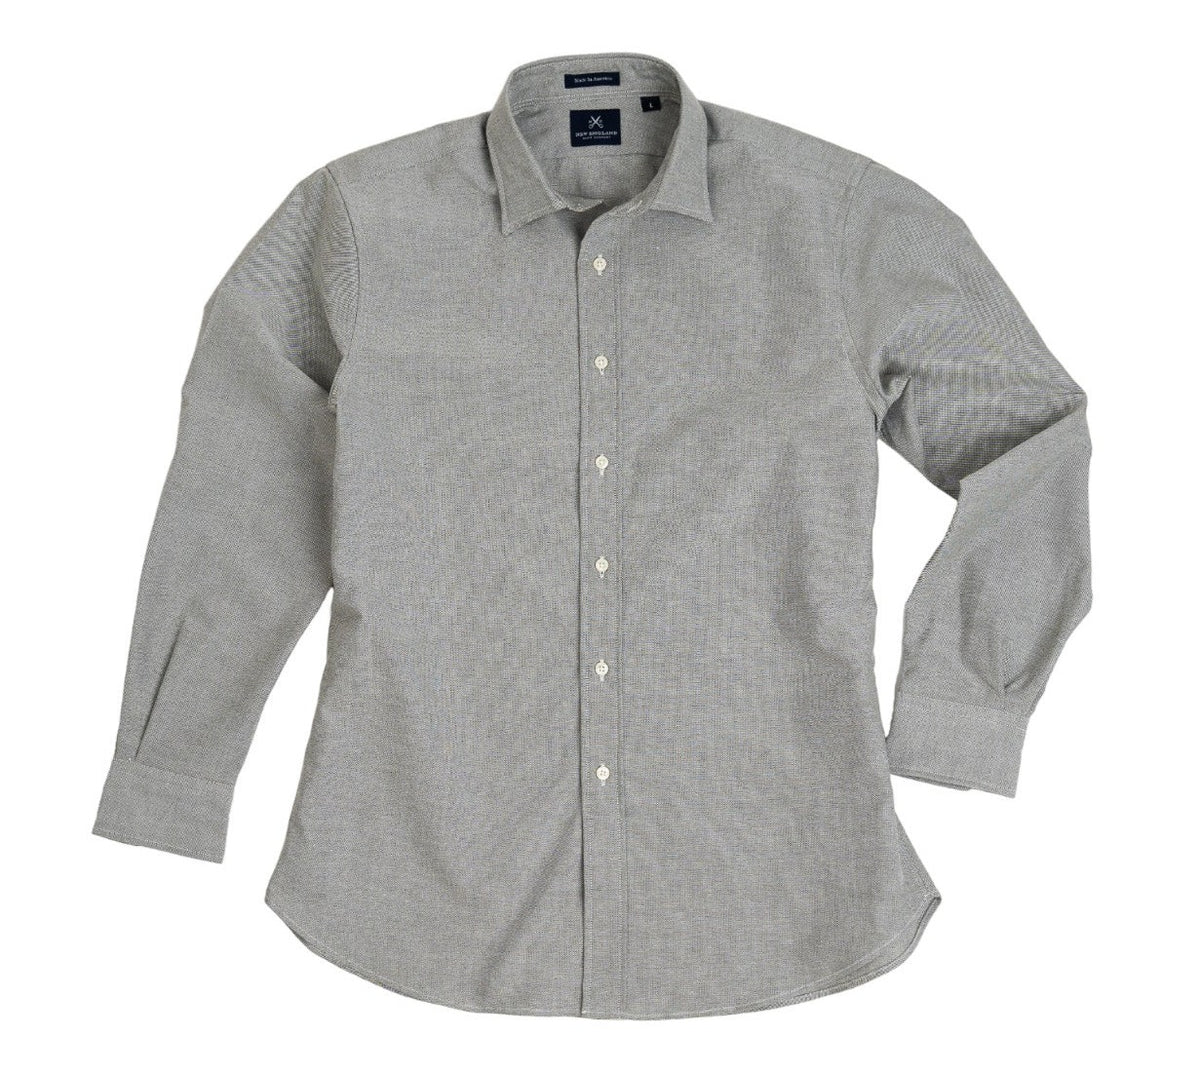 Weston Spread Collar Grey Oxford Sport Shirt